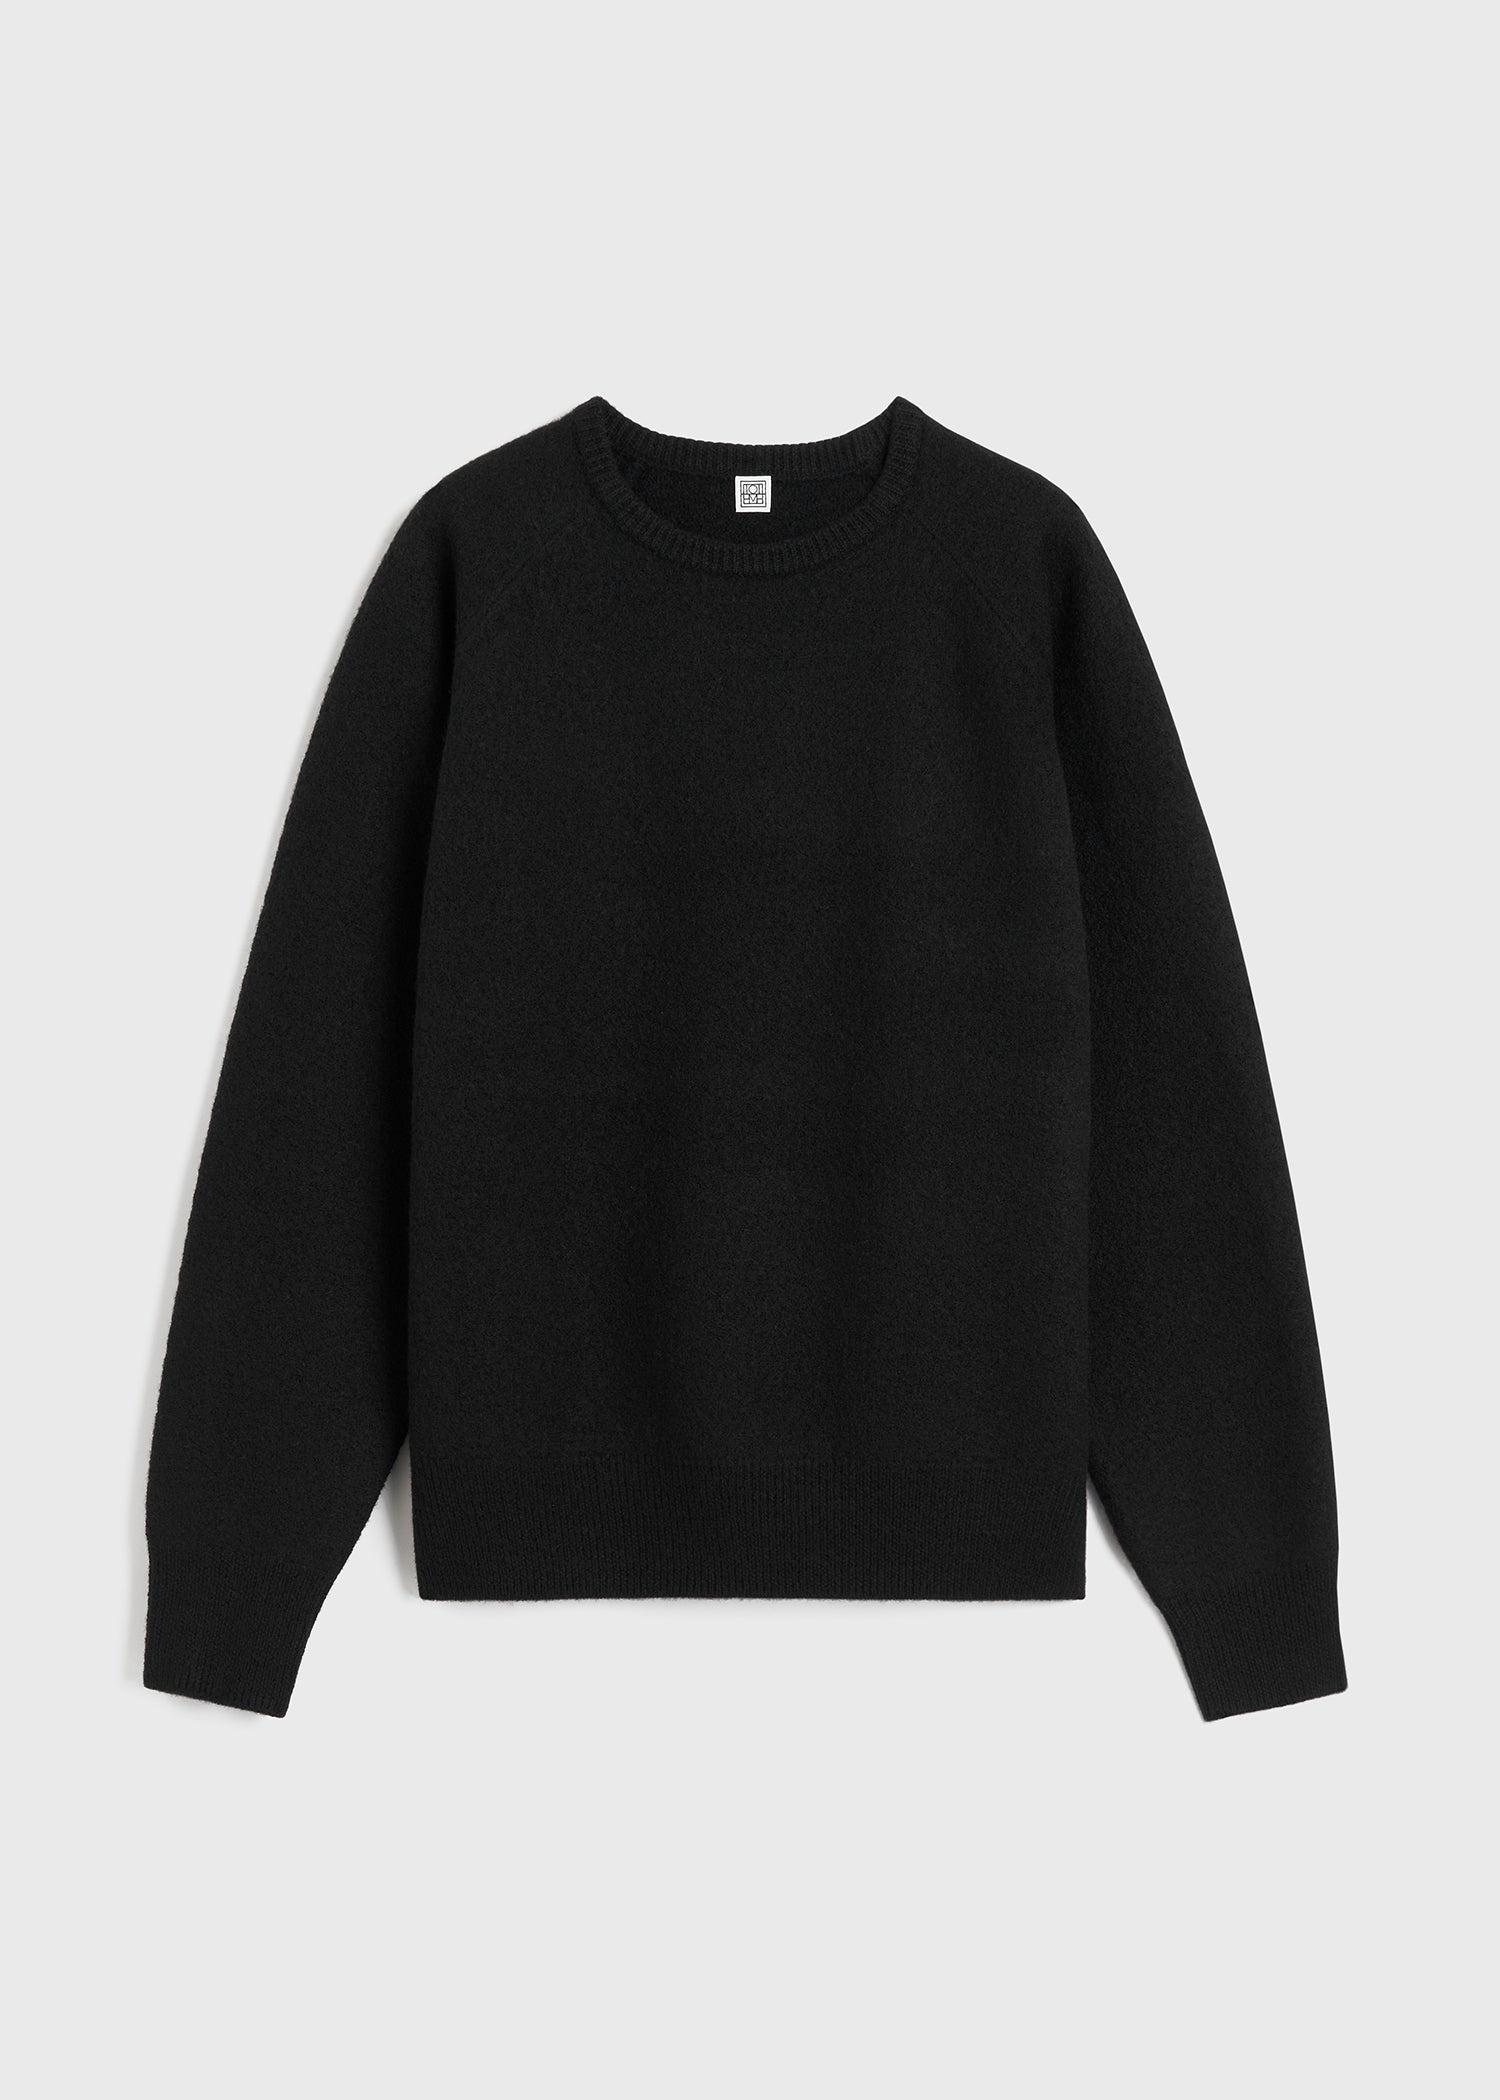 Crew-neck wool knit black - 1